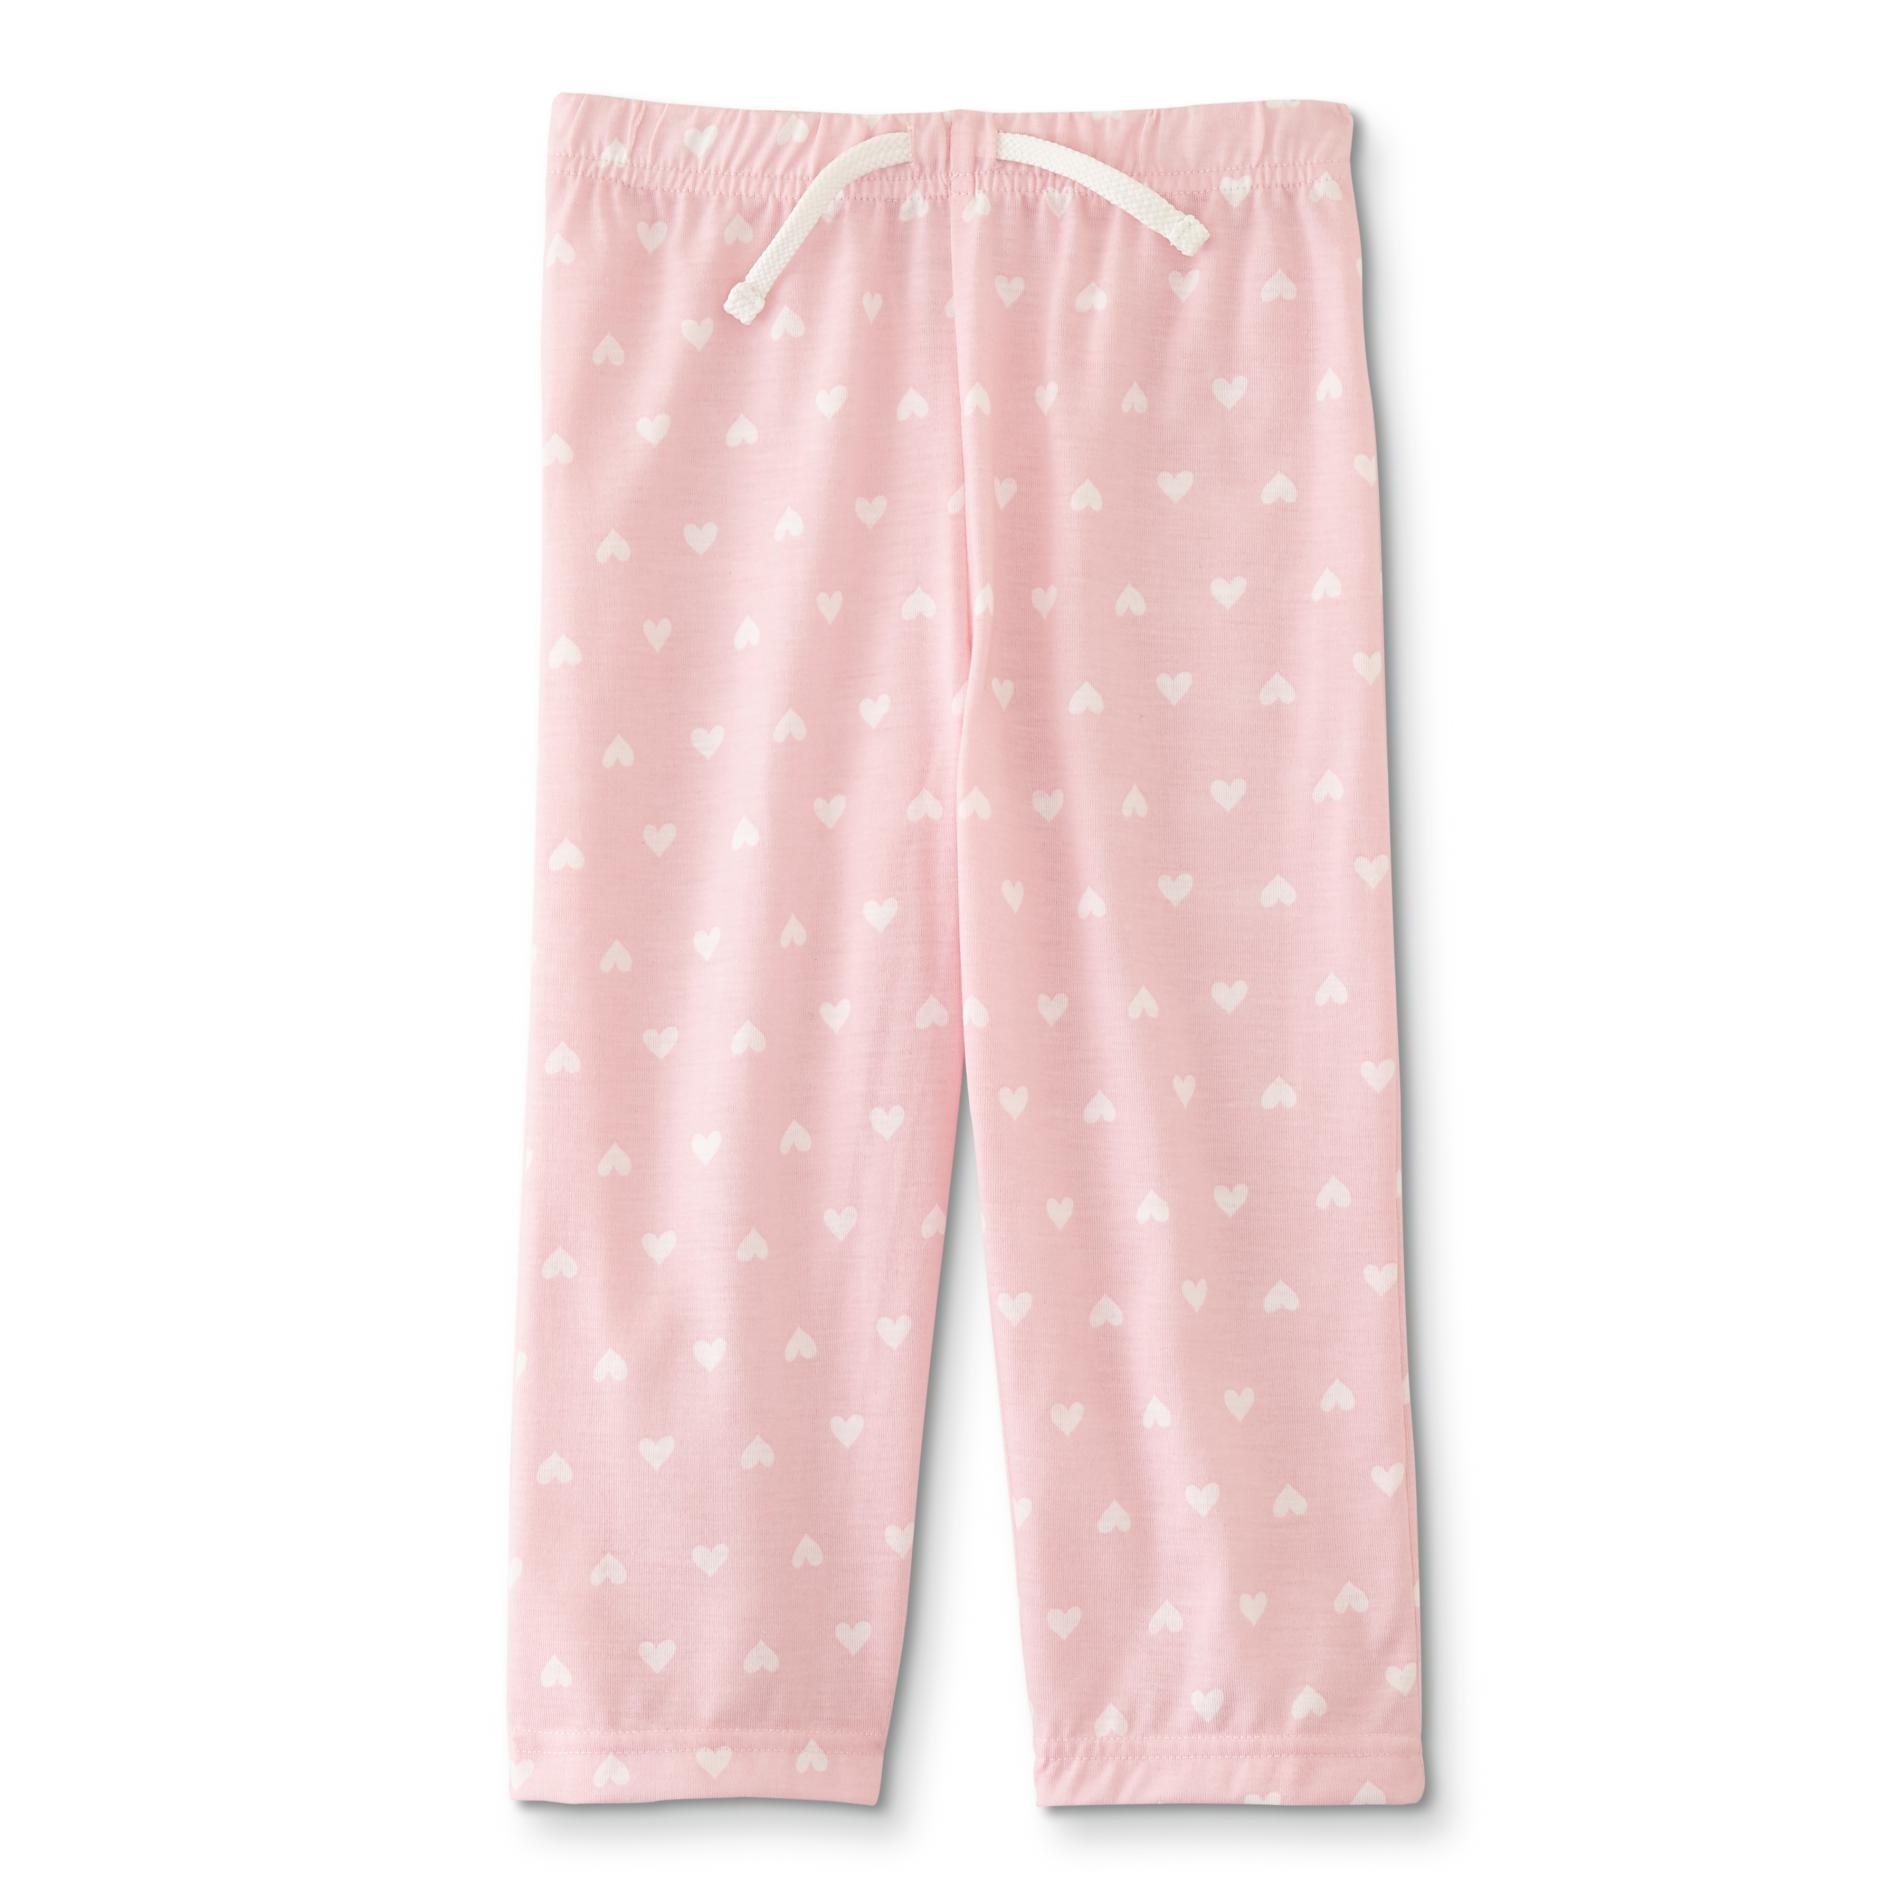 Basic Editions Infant & Toddler Girls' Pajama Pants - Hearts